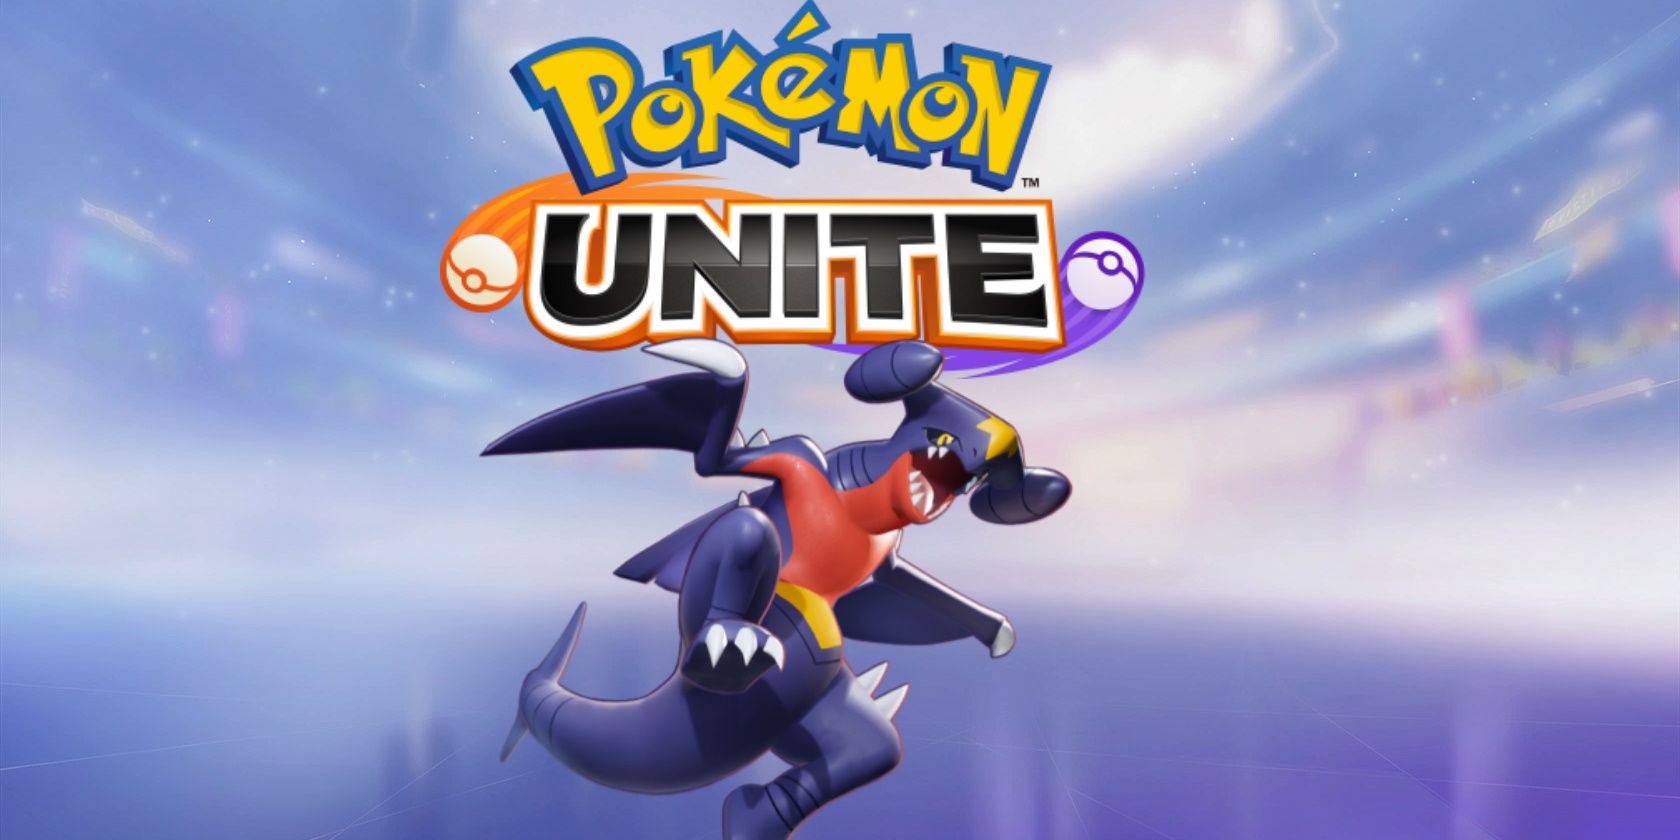 pokemon unite logo background